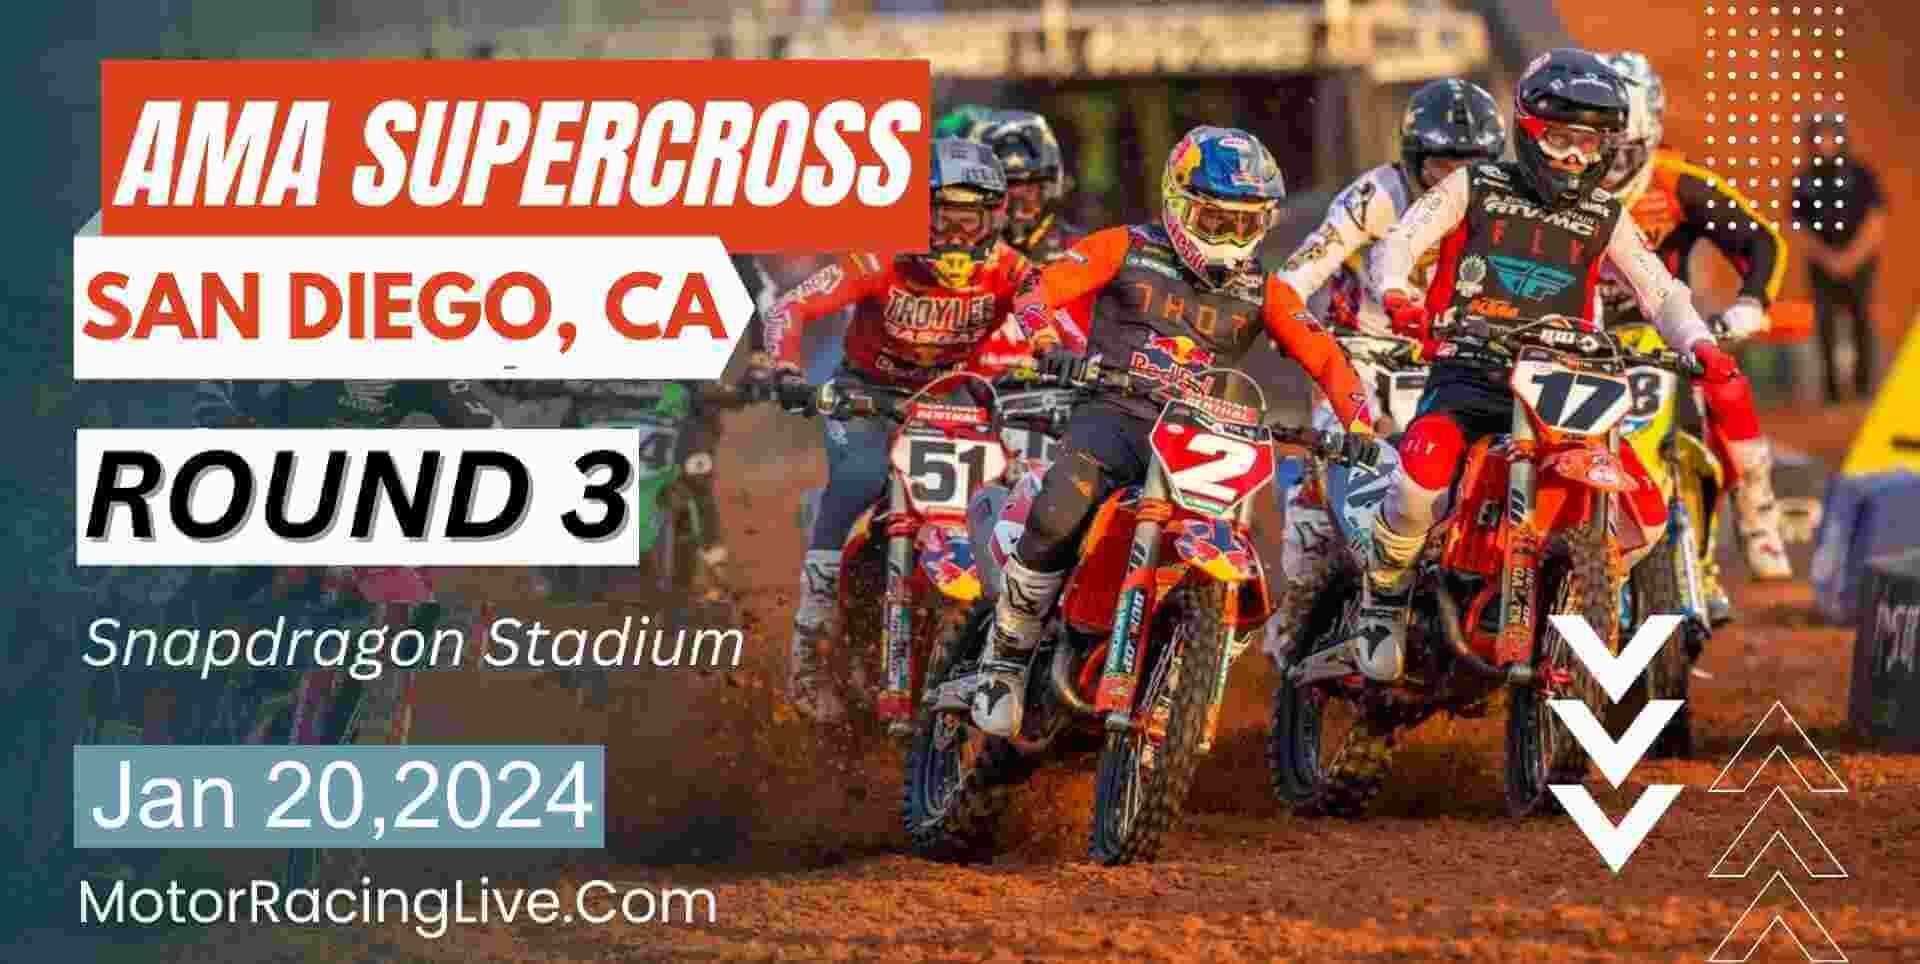 Supercross San Diego Live Streaming